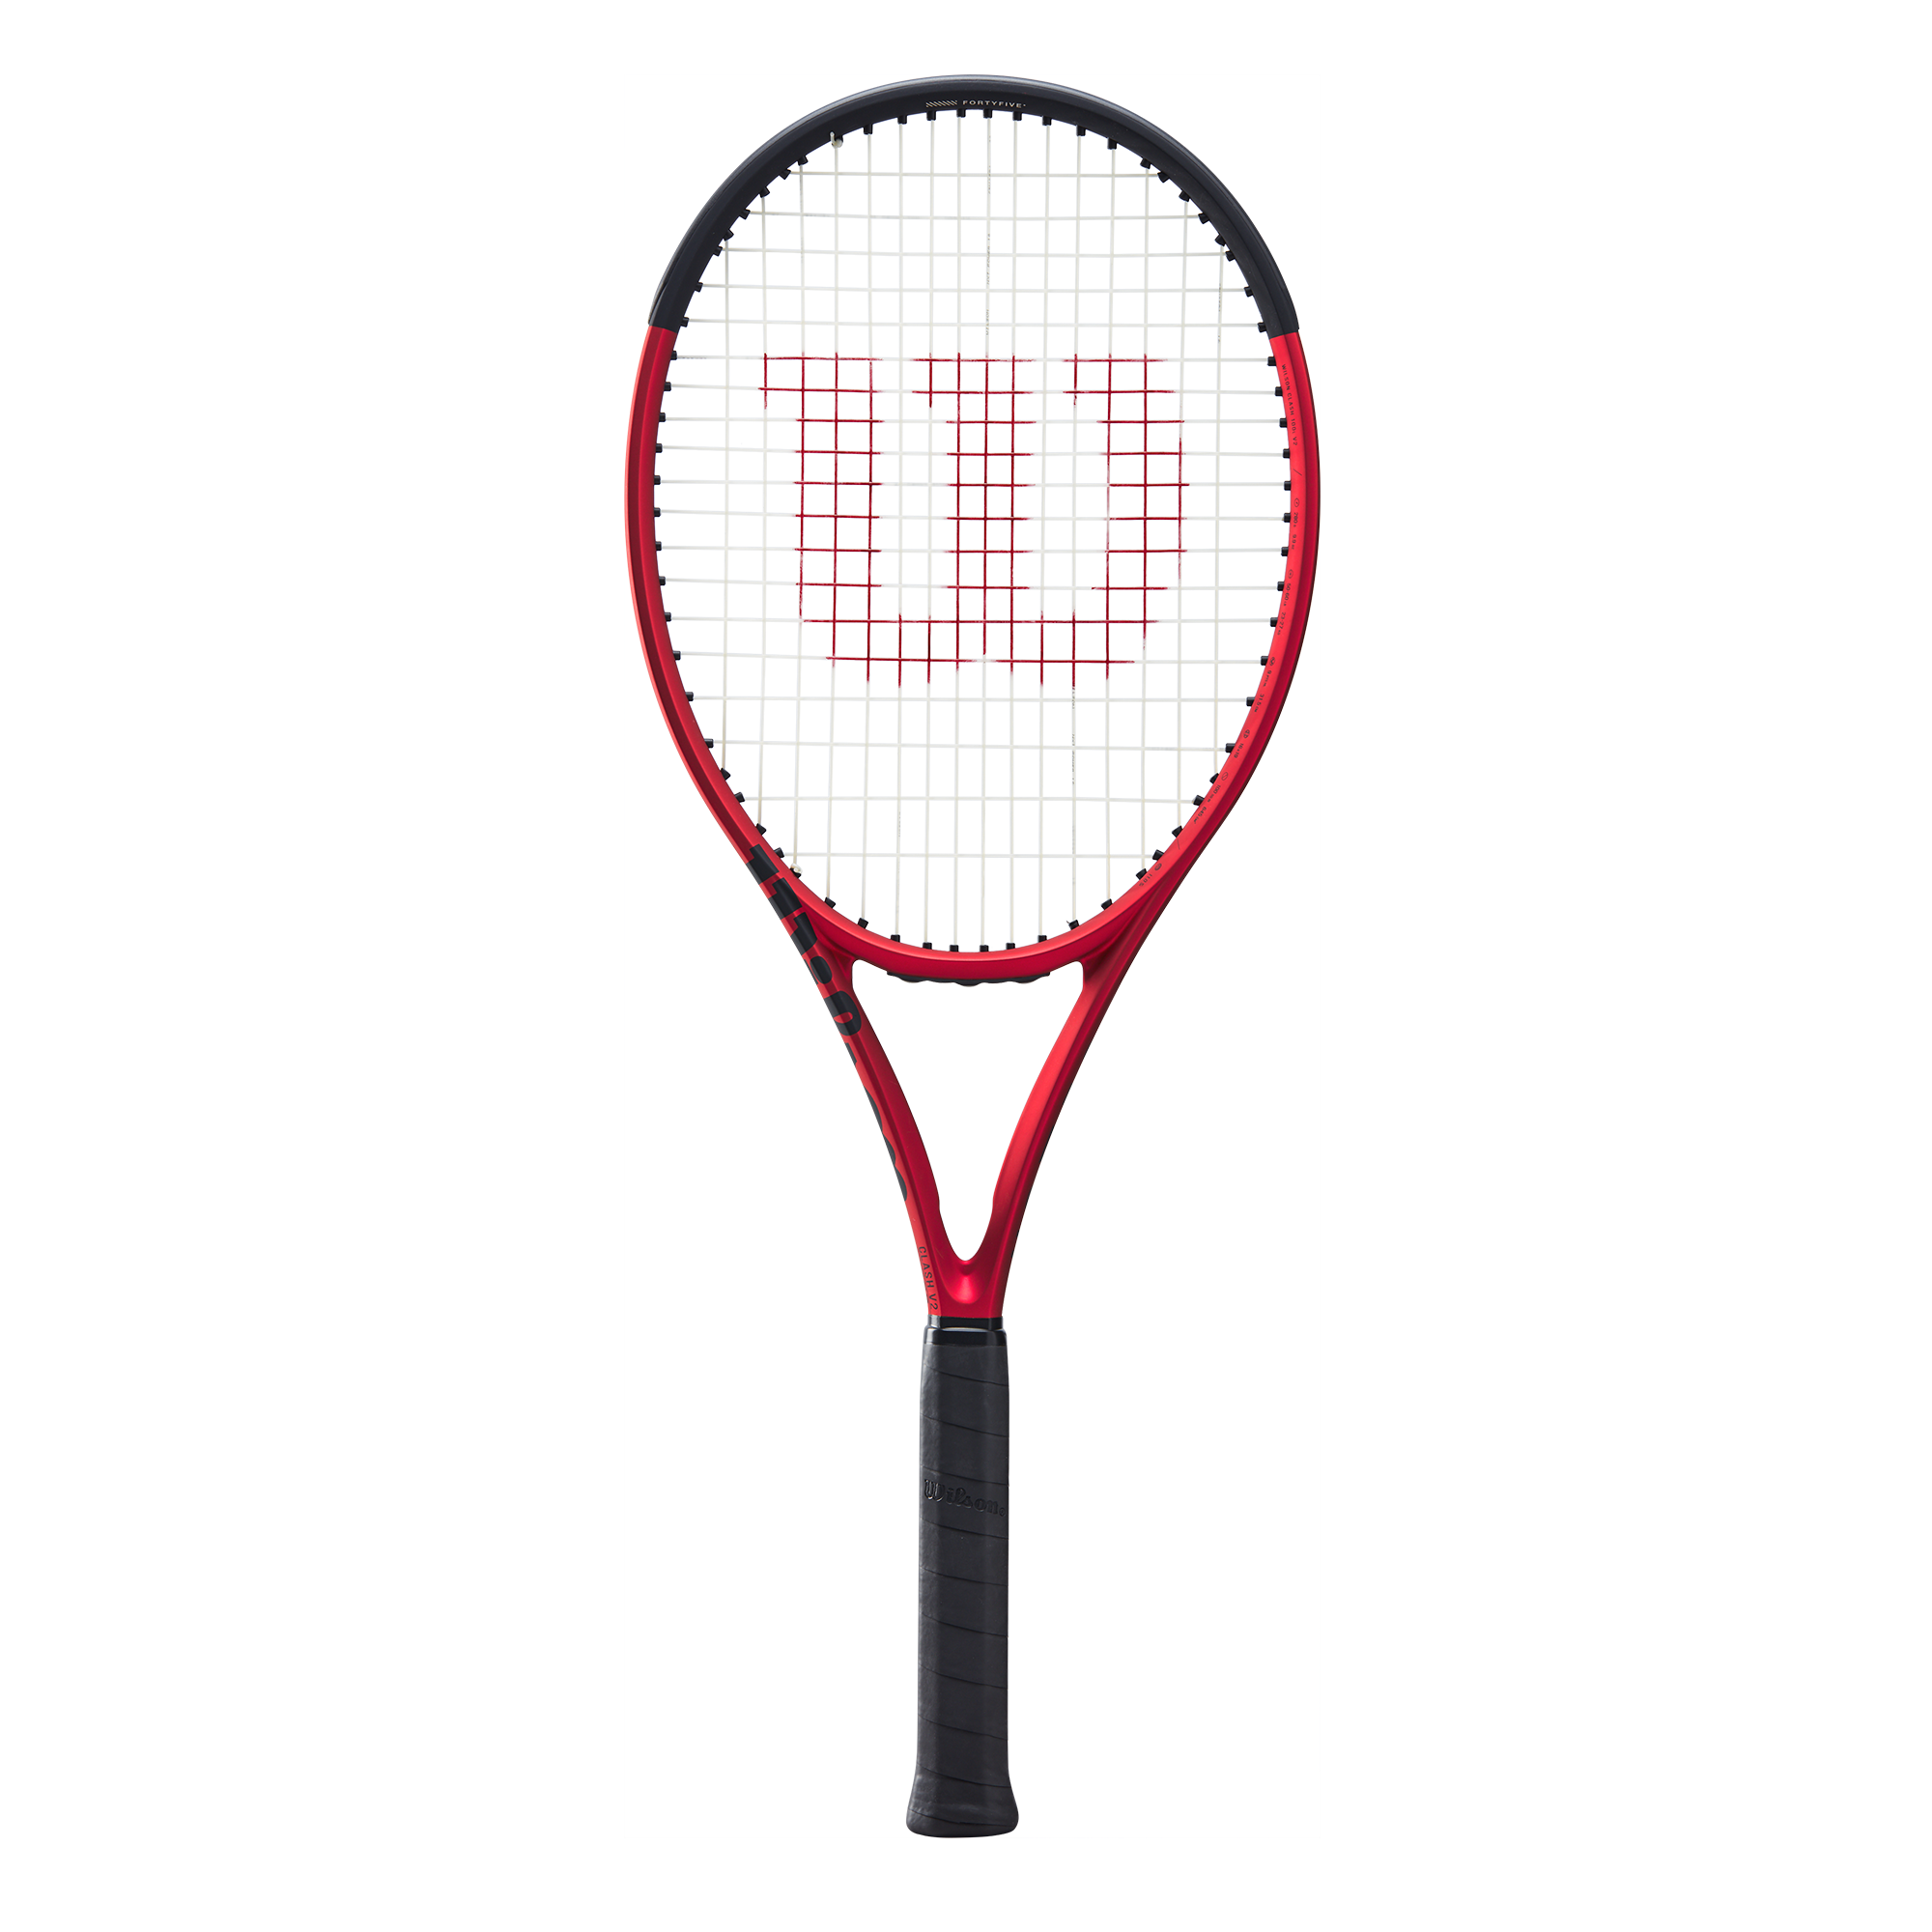 Wilson Tennis Pro Overgrip 3 Pack Gray Comfort Badminton Tape Racket  WRZ4014SI